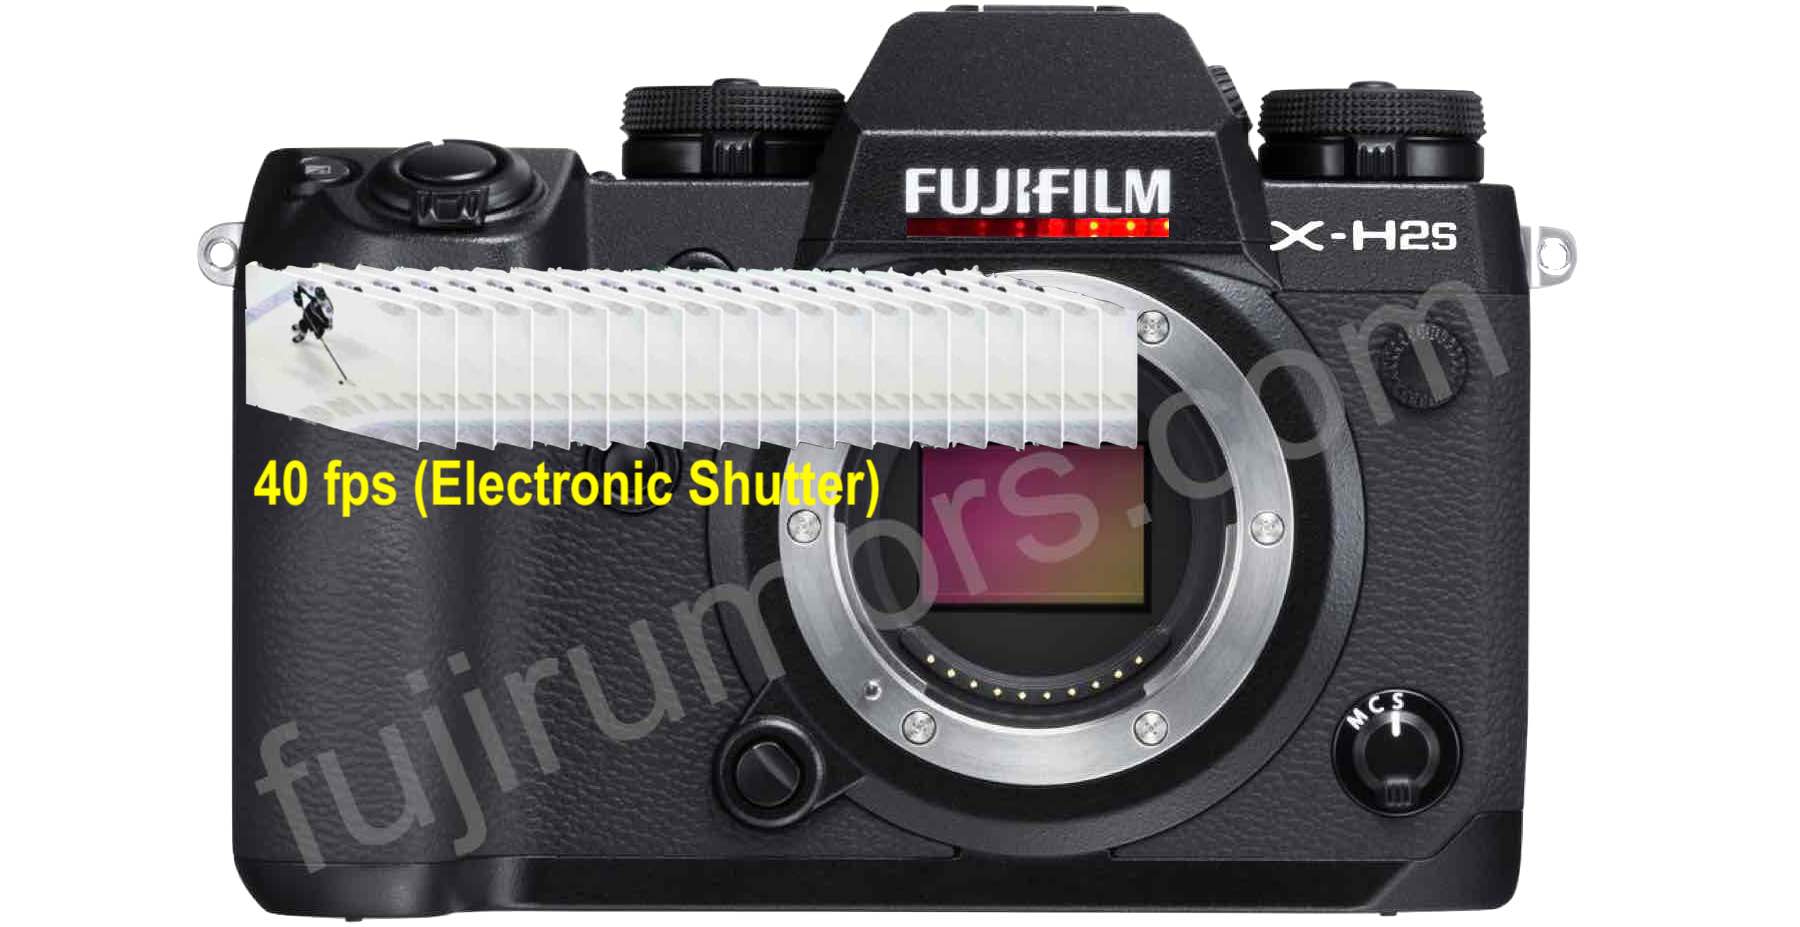 BREAKING: Fujifilm X-H2S to shoot 40 fps Bursts - Fuji Rumors